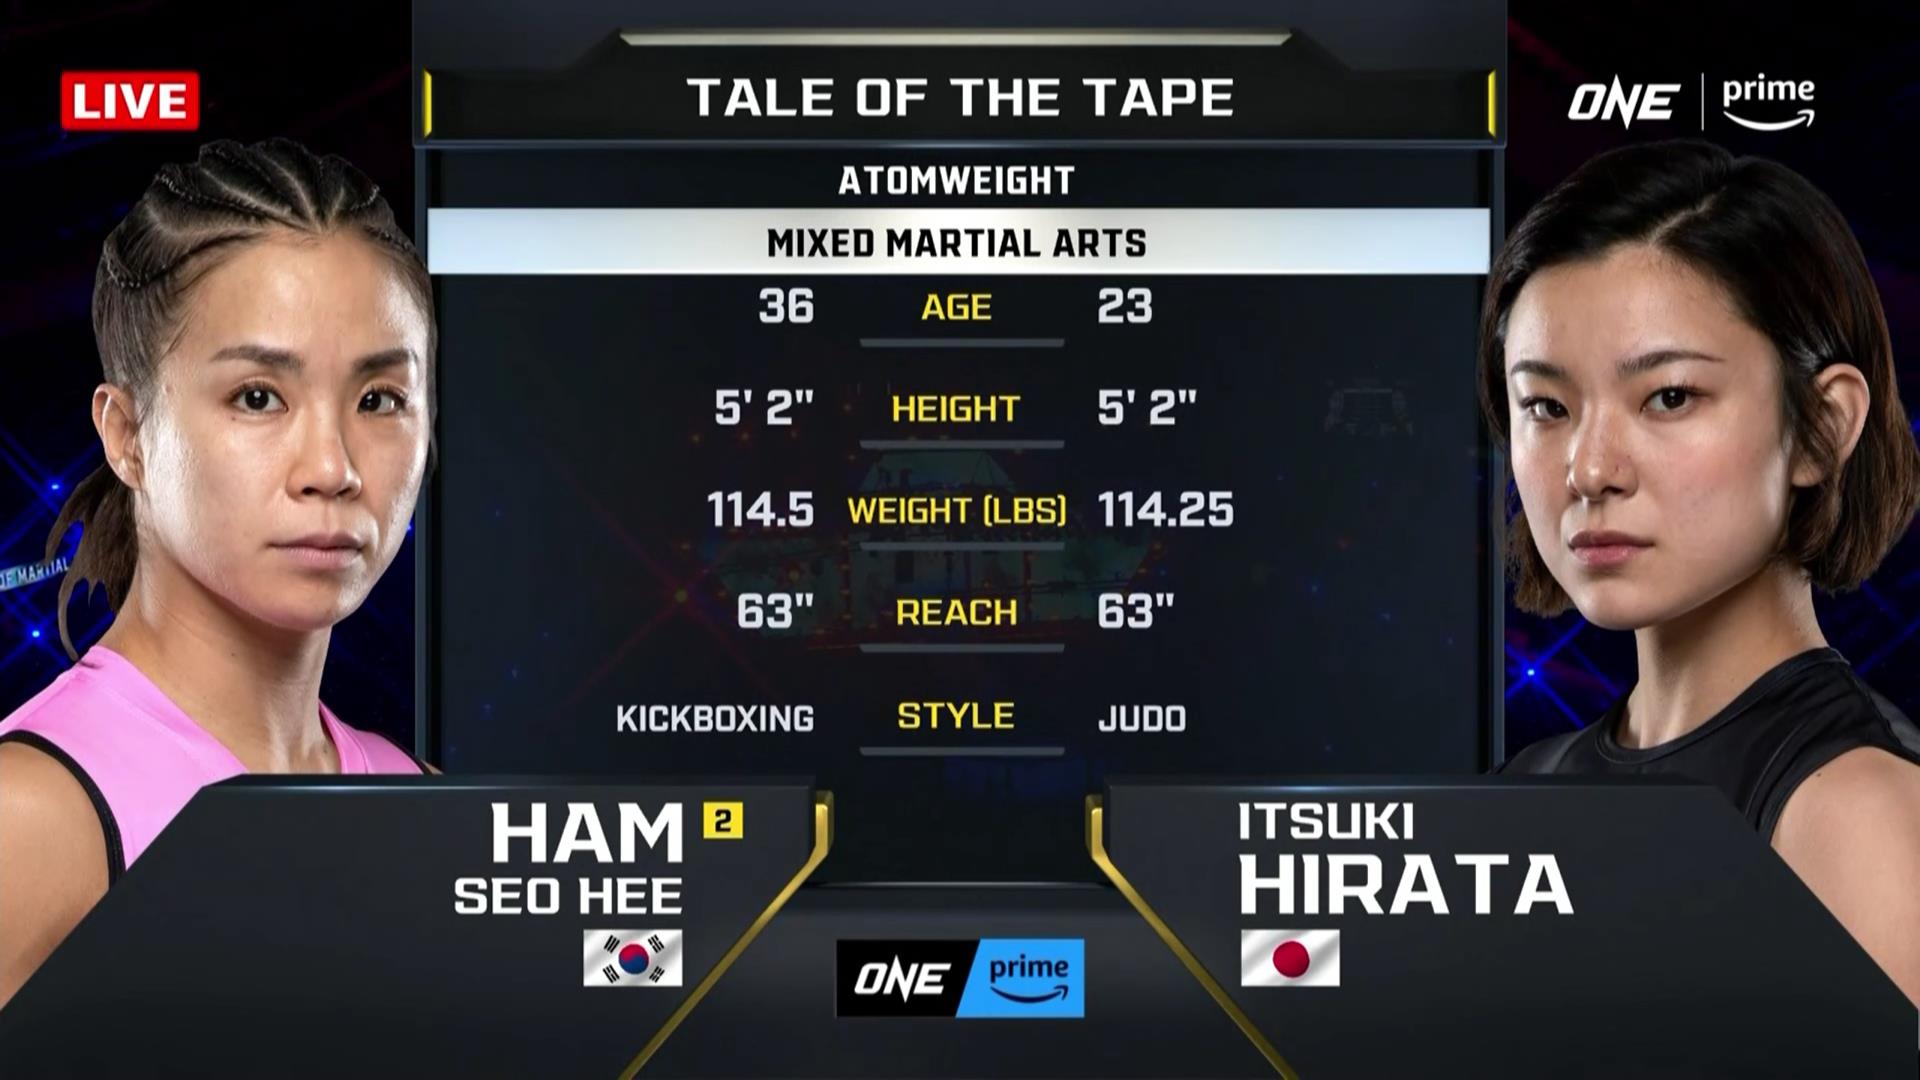 Itsuki Hirata vs Ham Seo Hee match